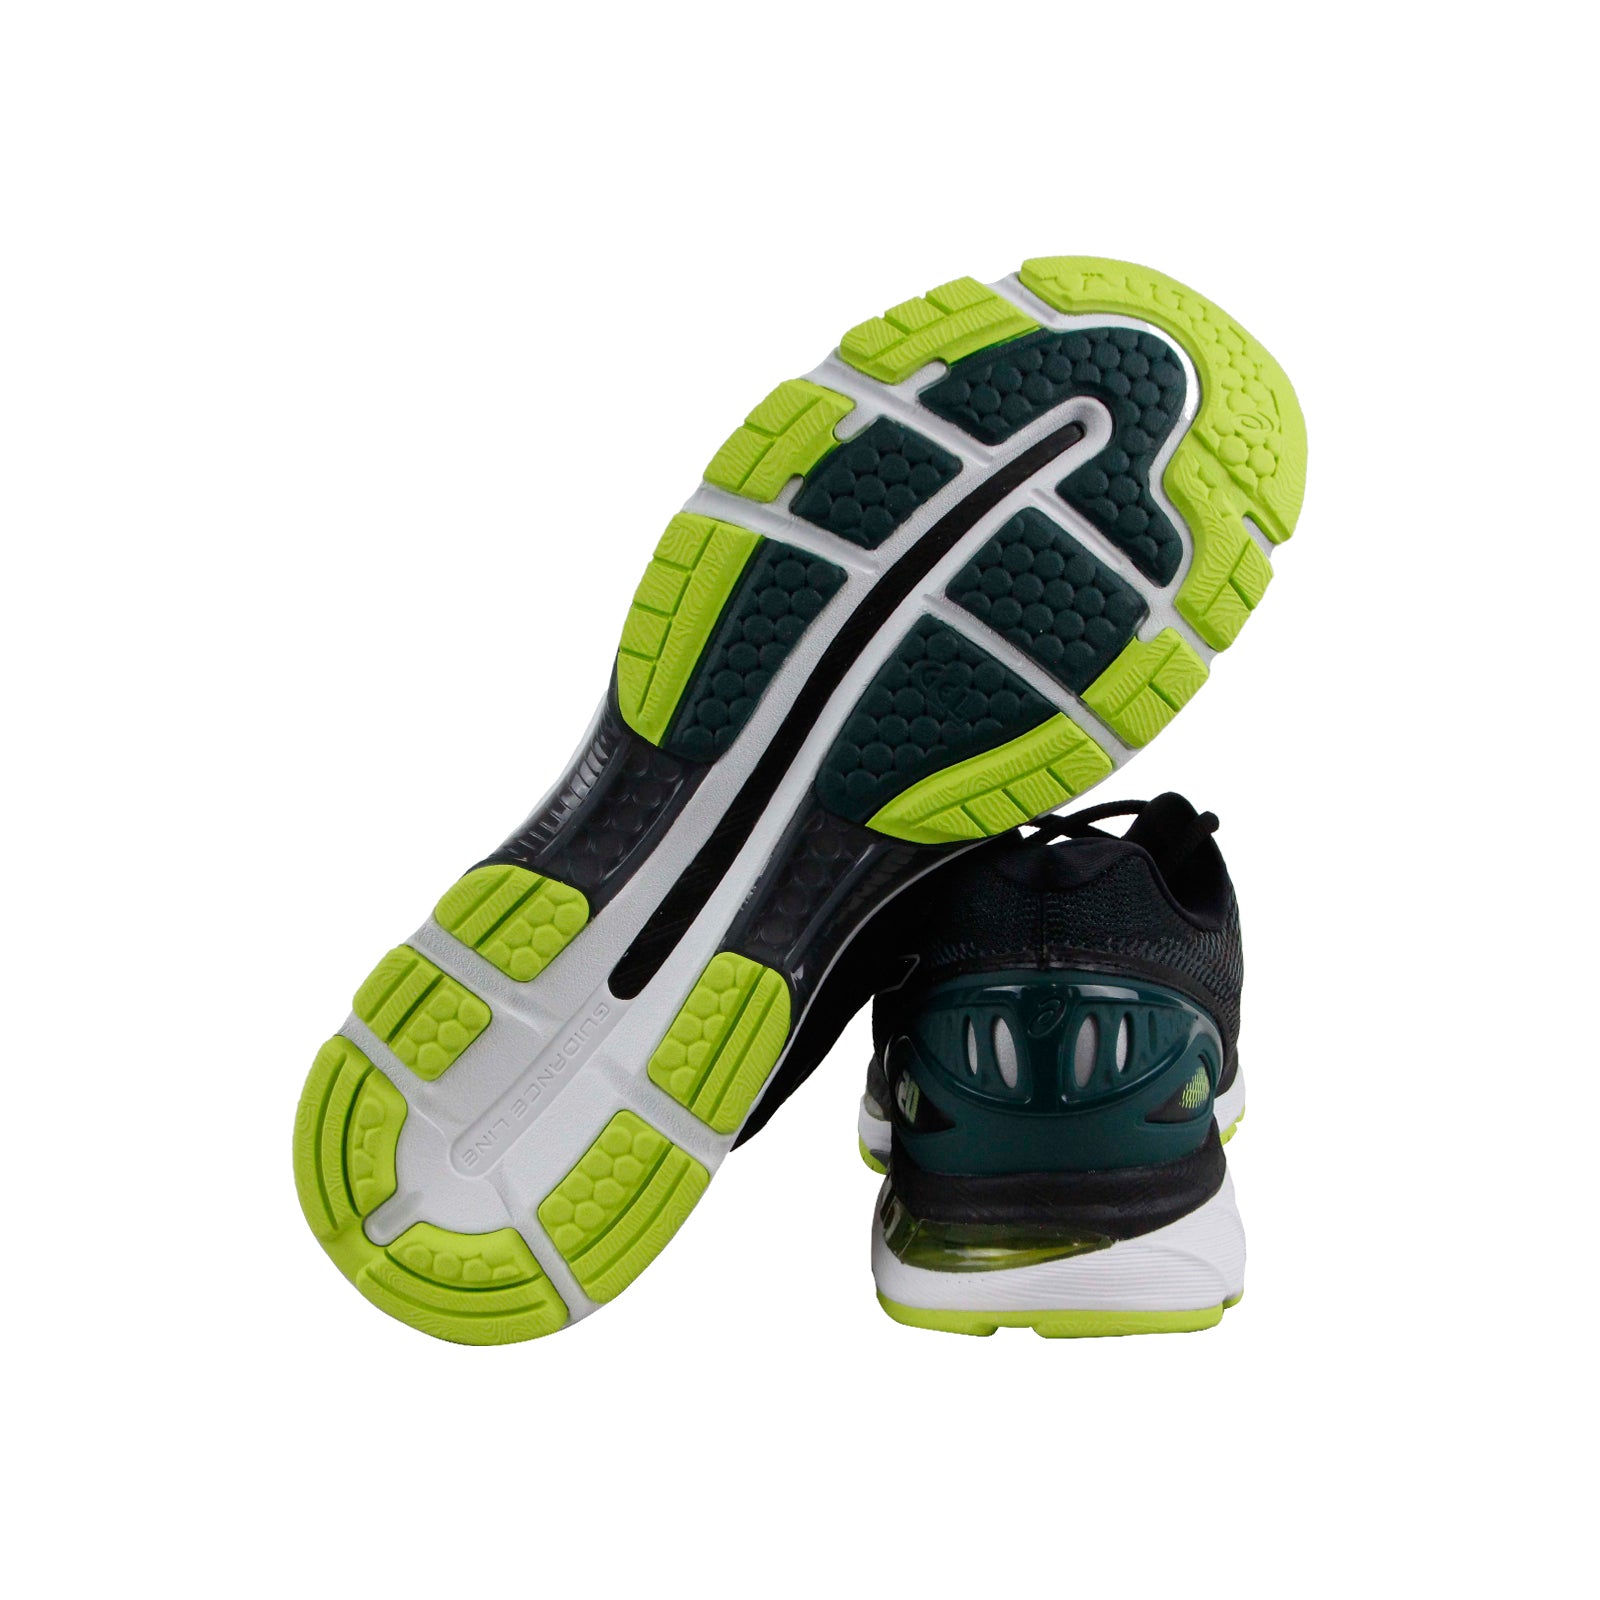 Knorretje invoegen Actuator Asics Gel Nimbus 20 T800N-004 Mens Black Mesh Lace Up Athletic Running -  Ruze Shoes